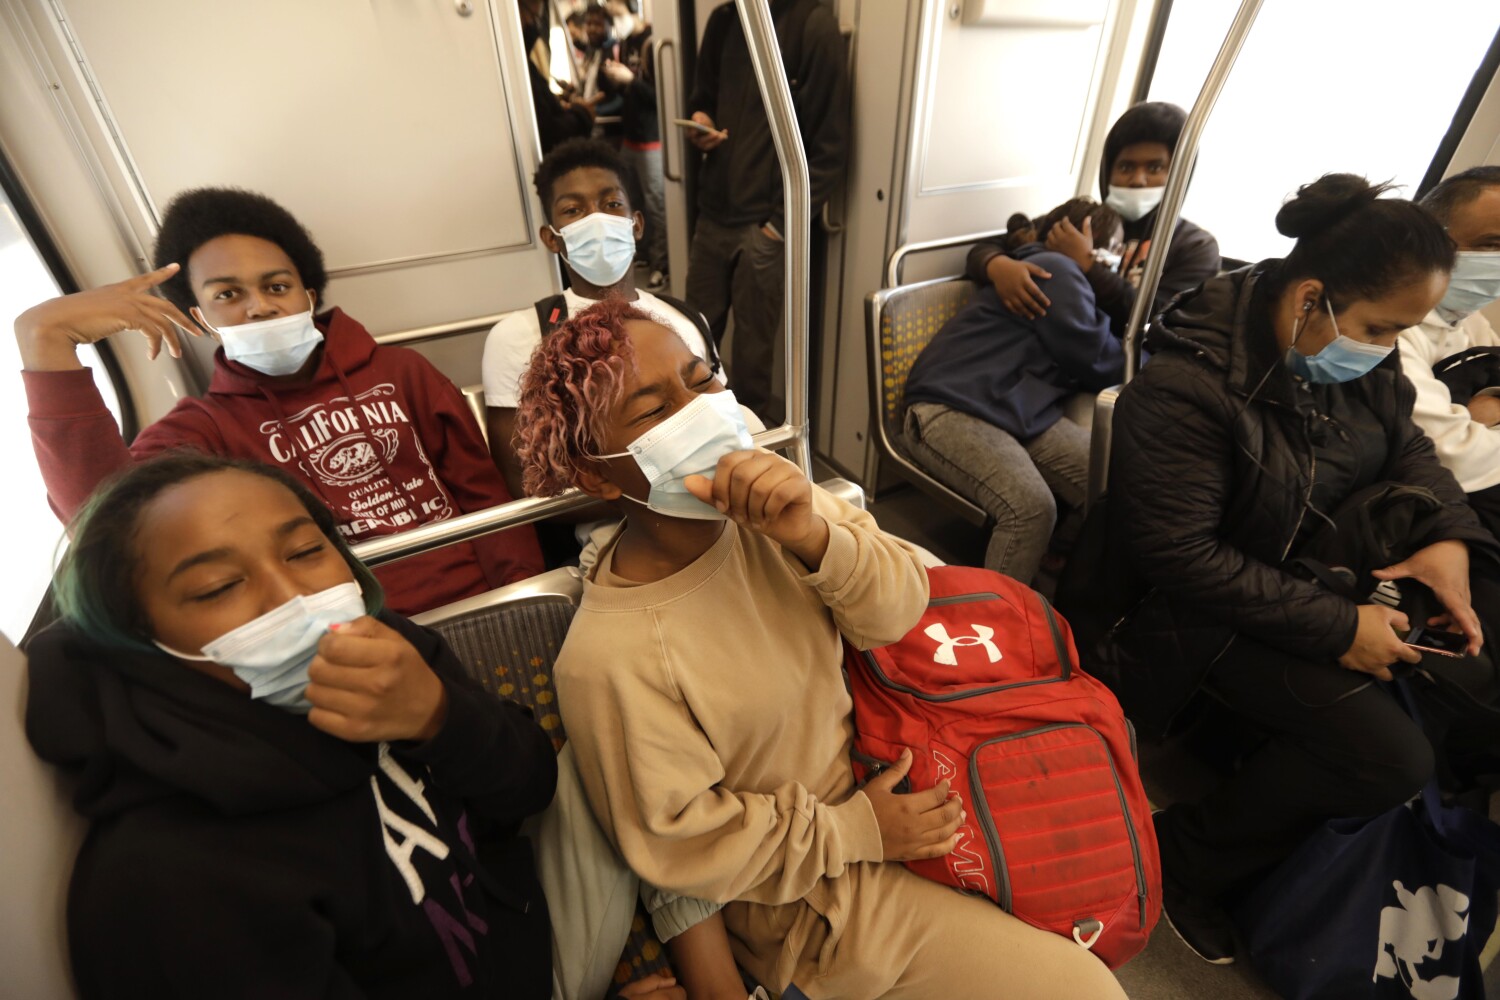 'Significant uptick' in California coronavirus outbreaks